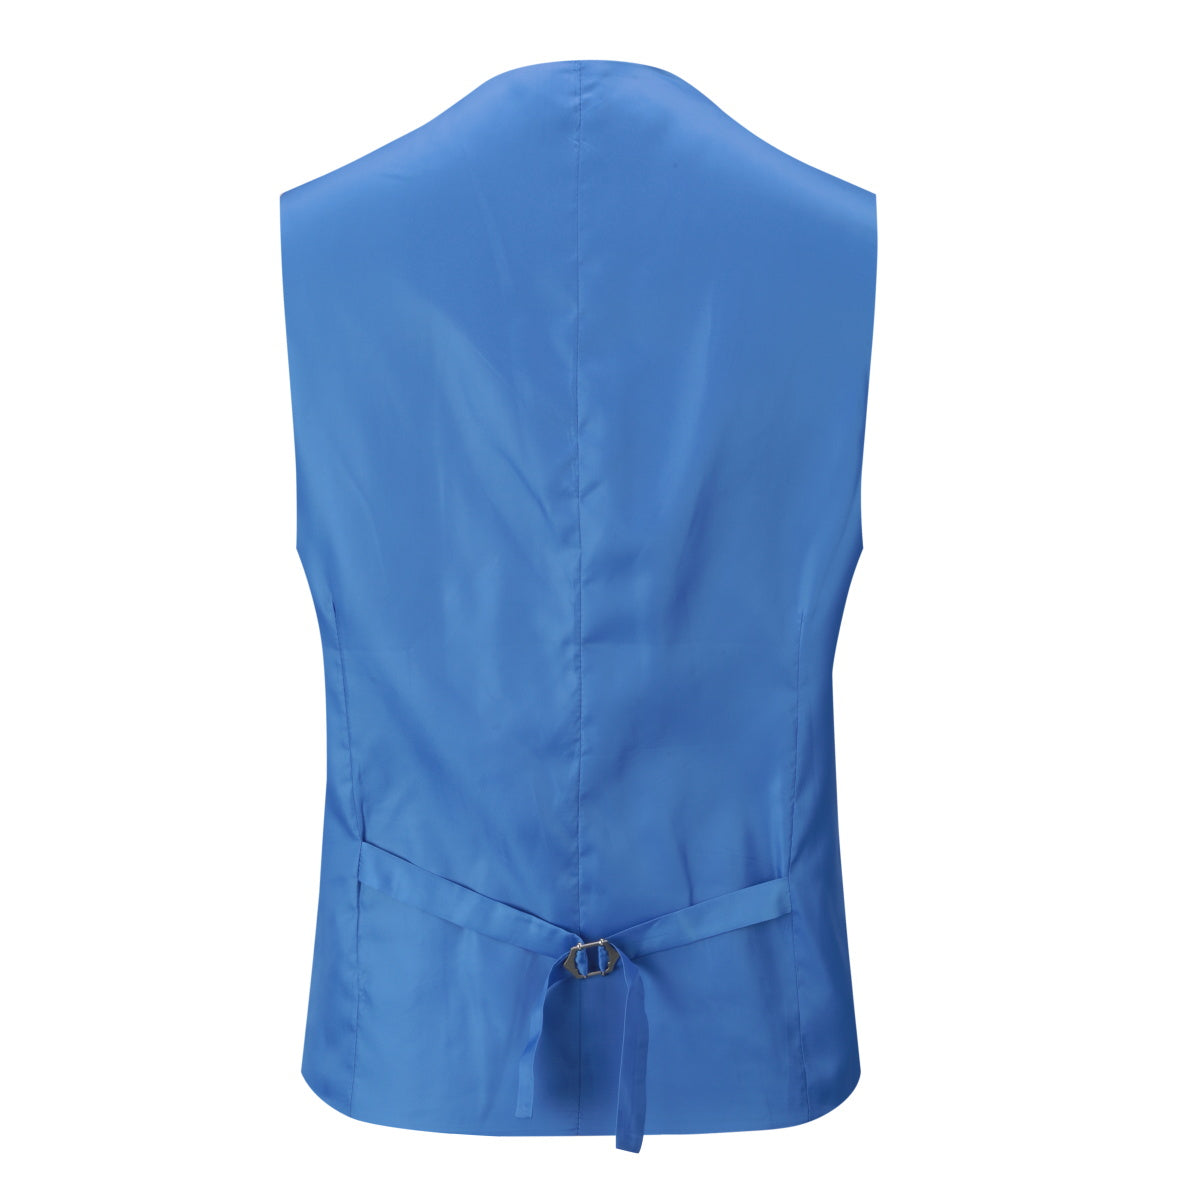 Dark Blue 3-Piece Lapel One Button Velvet Tuxedo